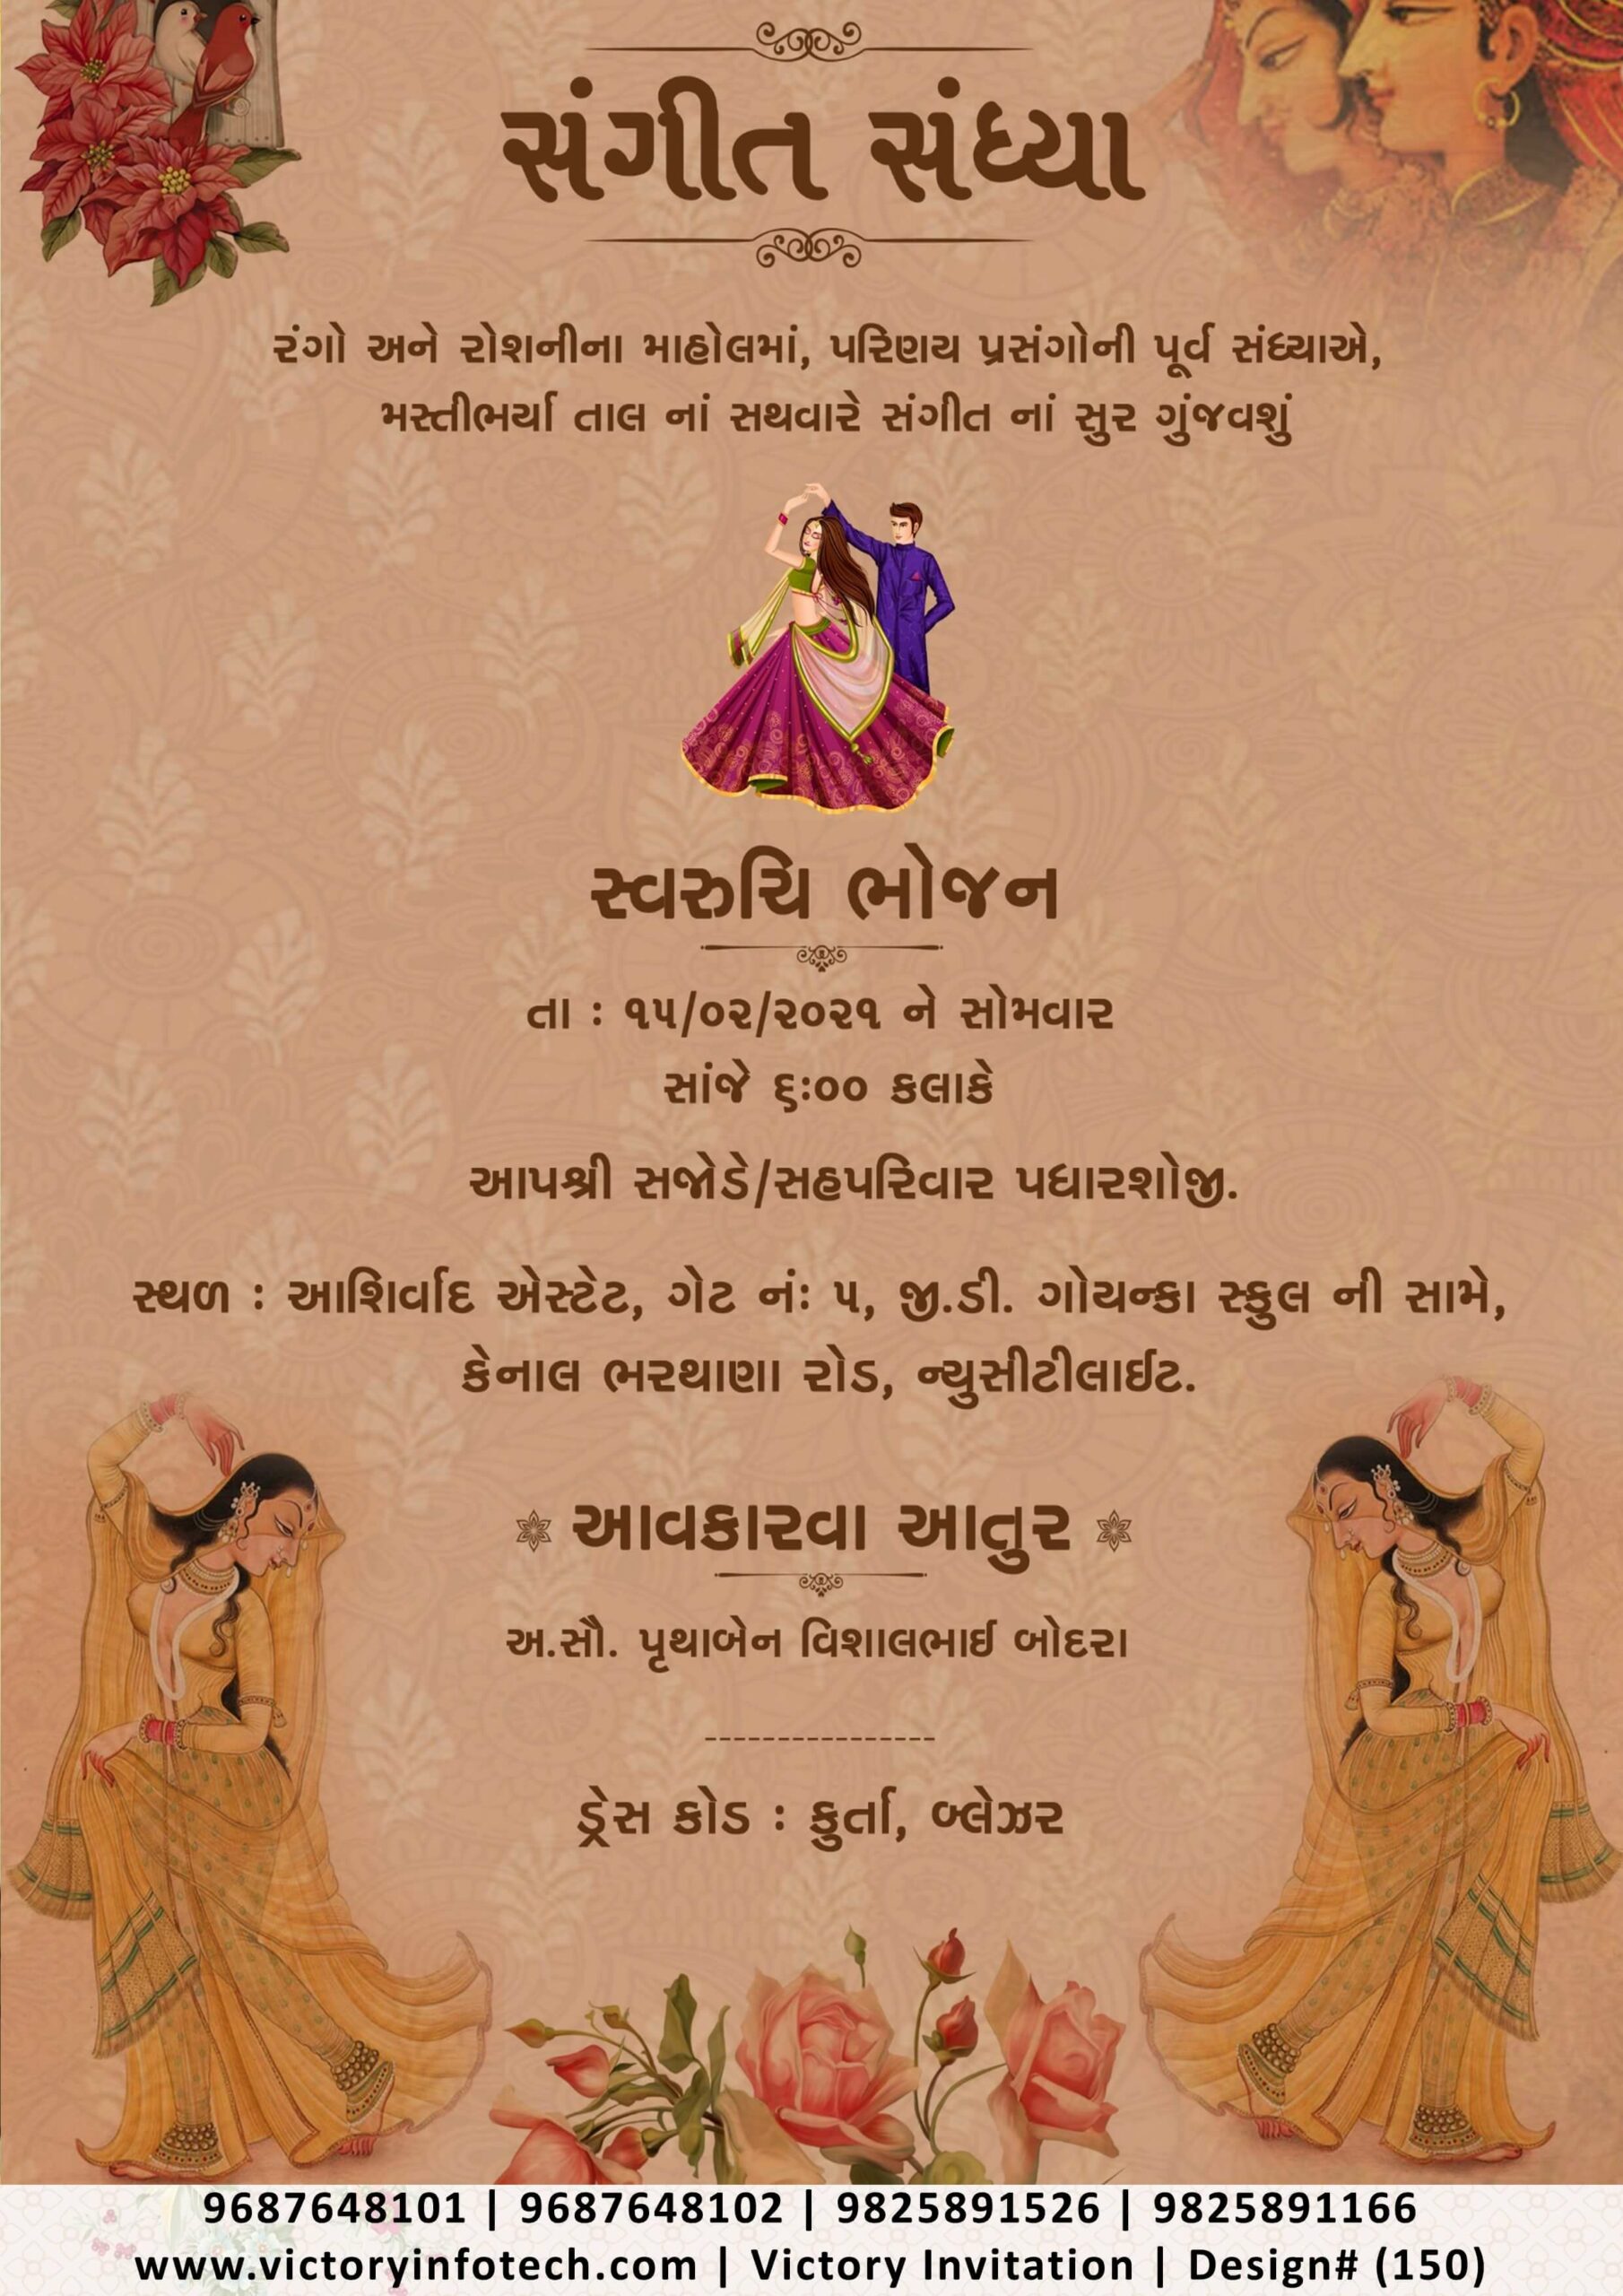 Sangeet Ceremony digital invitation card in gujarati design no.150